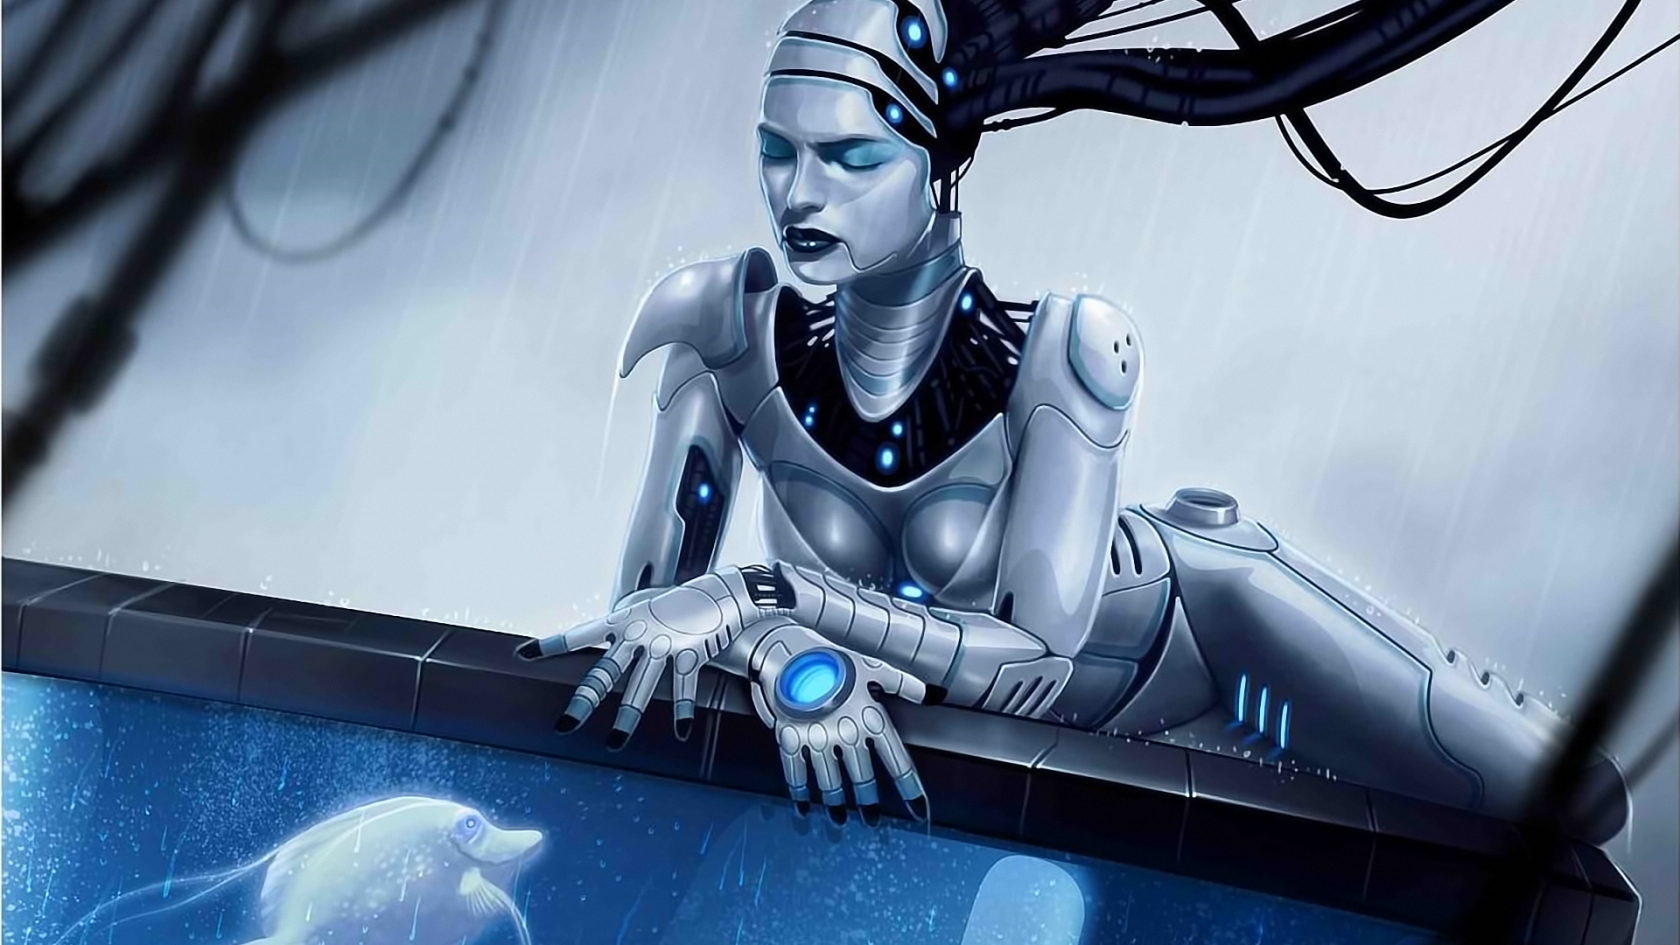 Fantasy Woman Robot for 1680 x 945 HDTV resolution